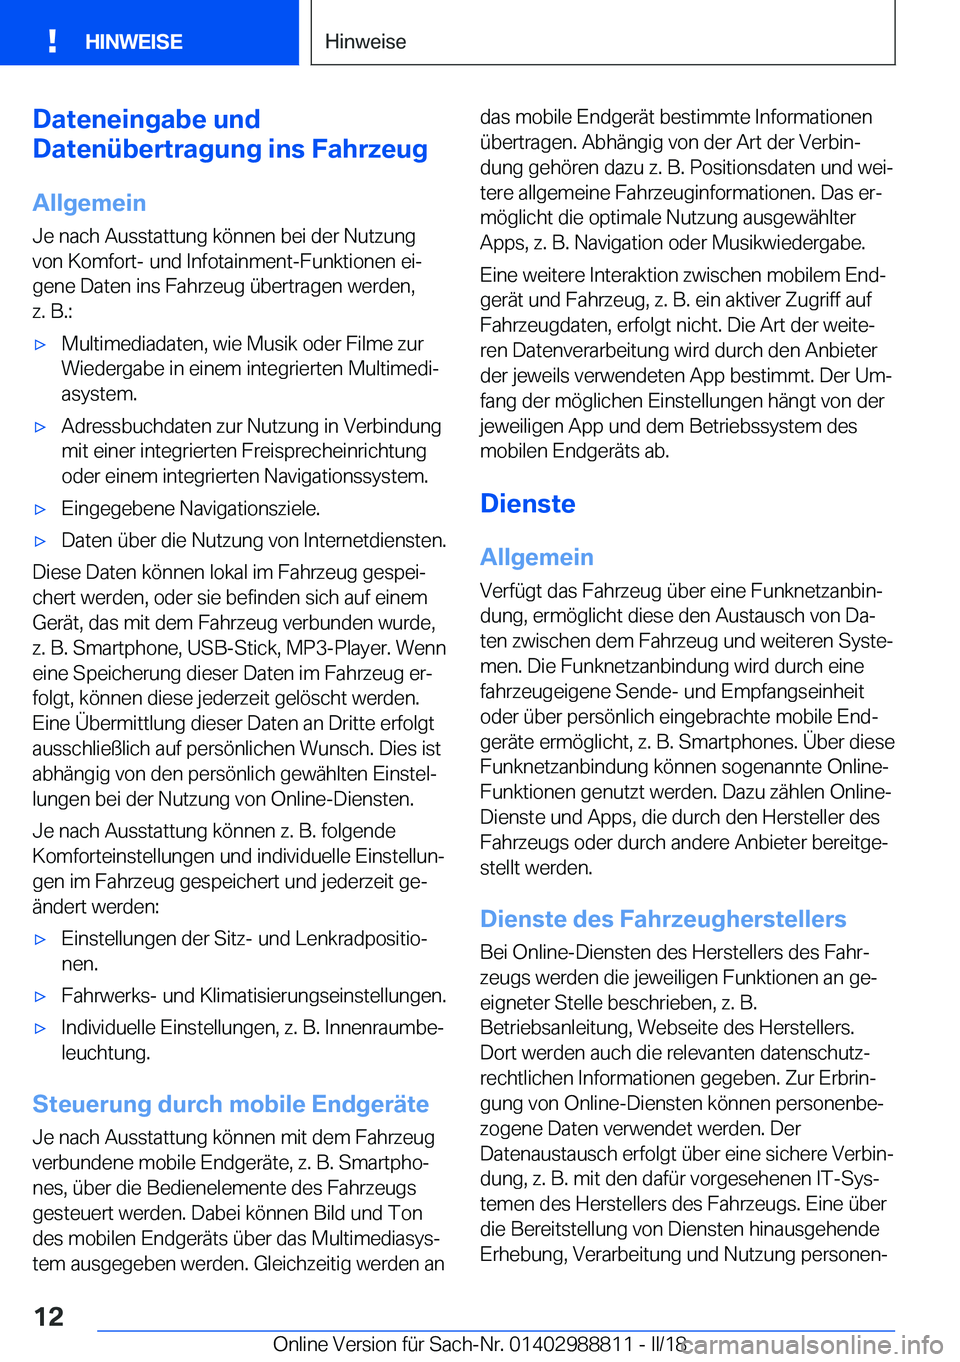 BMW X5 2018  Betriebsanleitungen (in German) �D�a�t�e�n�e�i�n�g�a�b�e��u�n�d
�D�a�t�e�n�